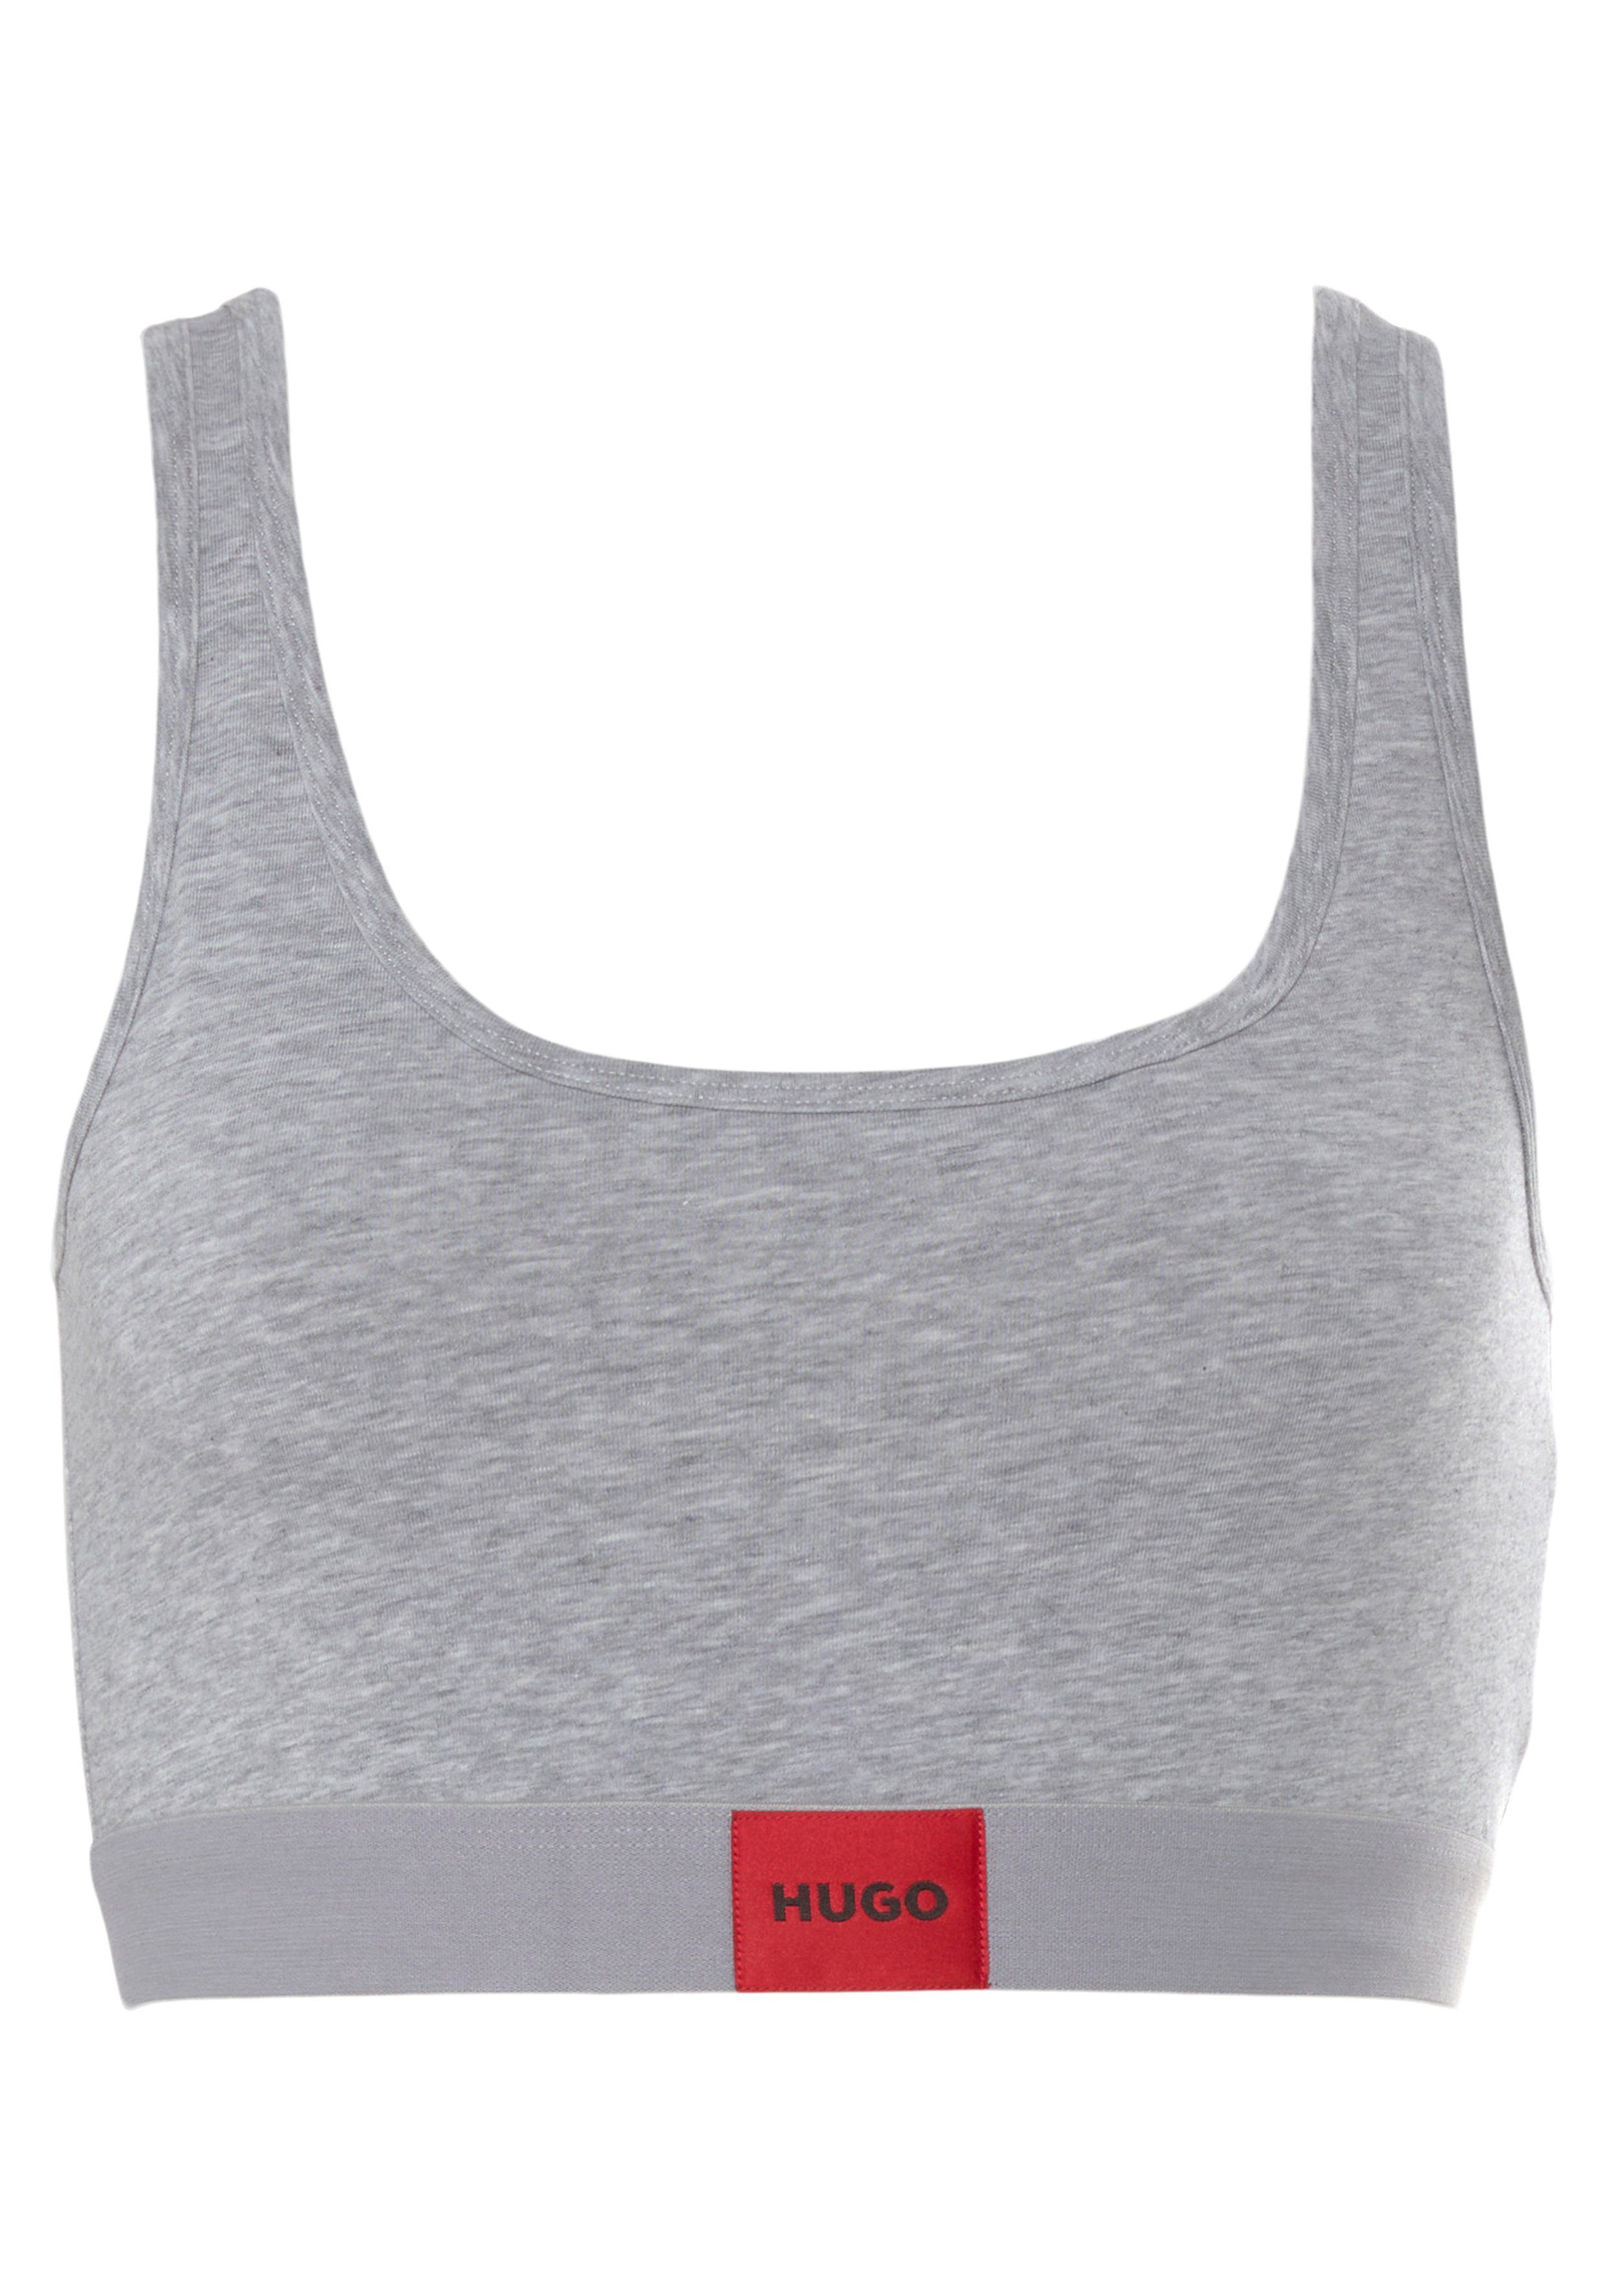 HUGO Bralette-BH BRALETTE RED LABEL mit Medium_Grey HUGO Logo